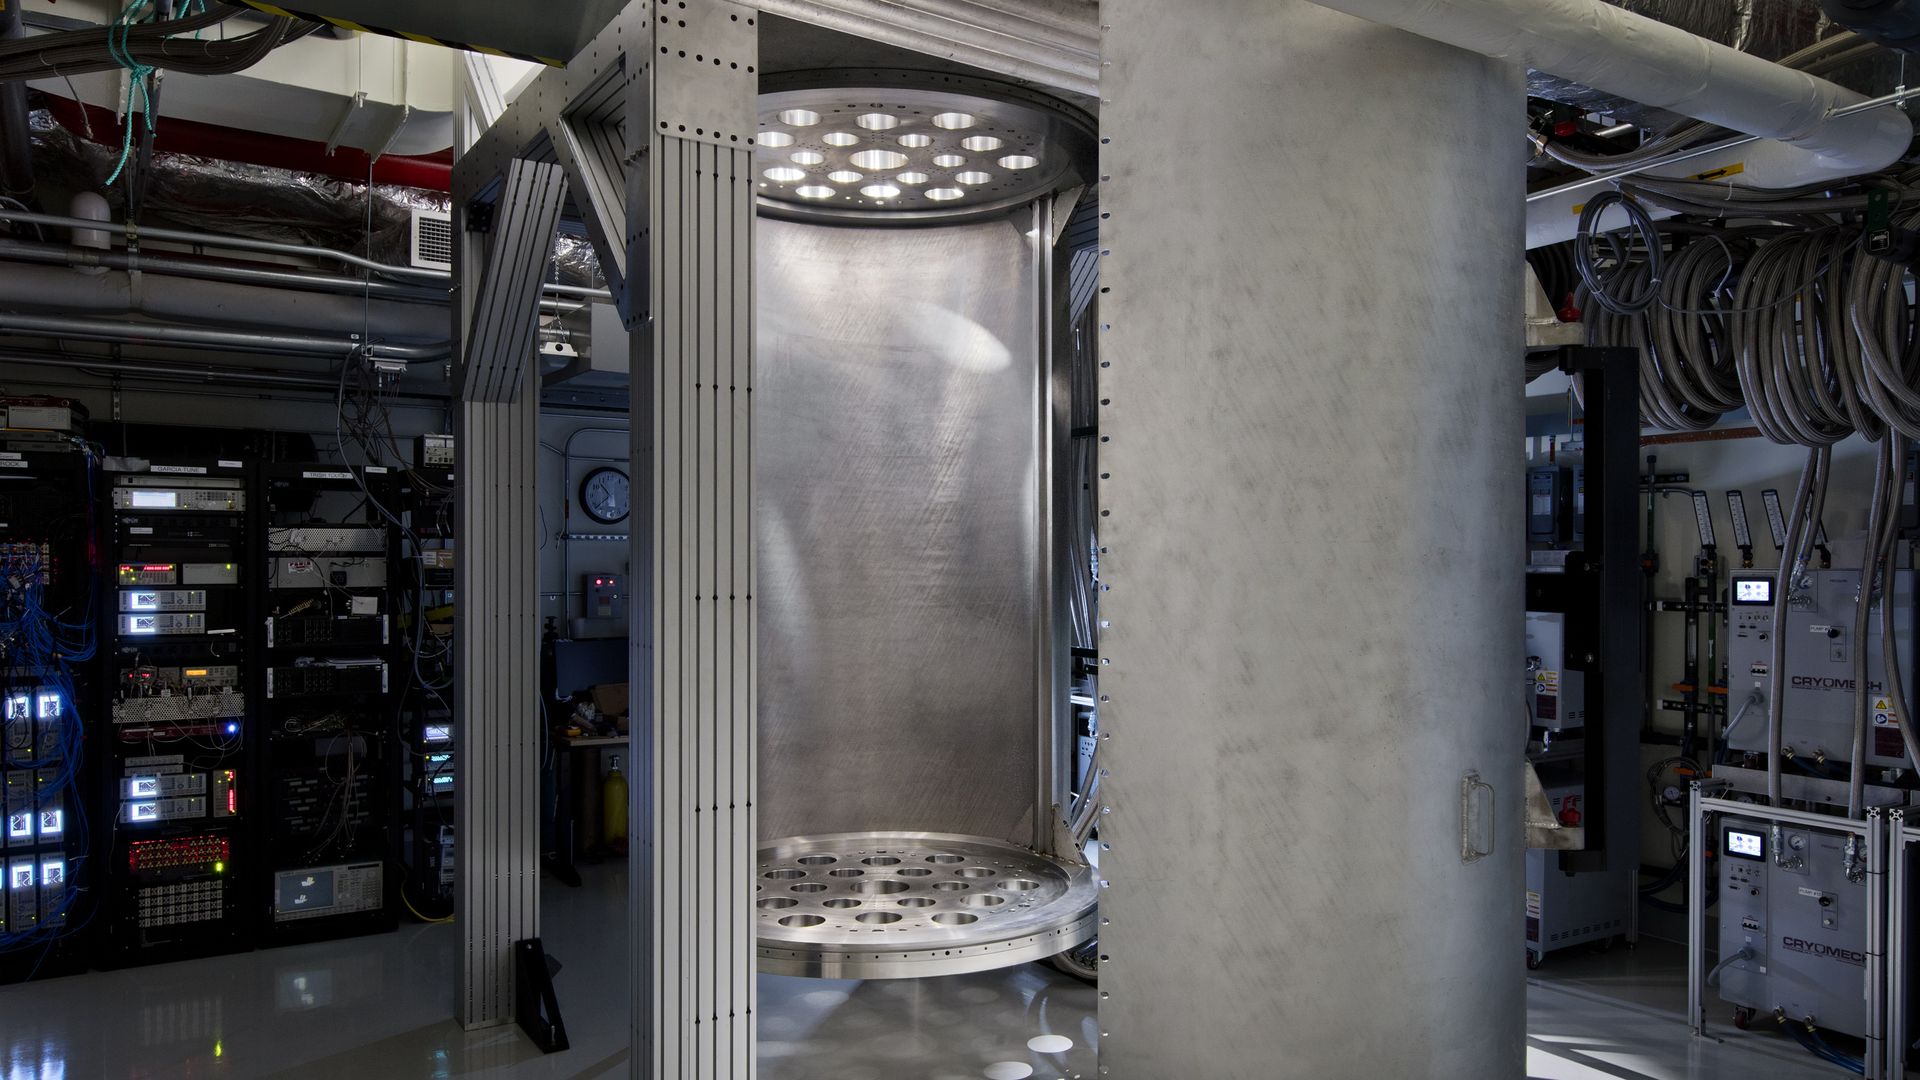 IBM cryosat refrigerator for cooling quantum computers